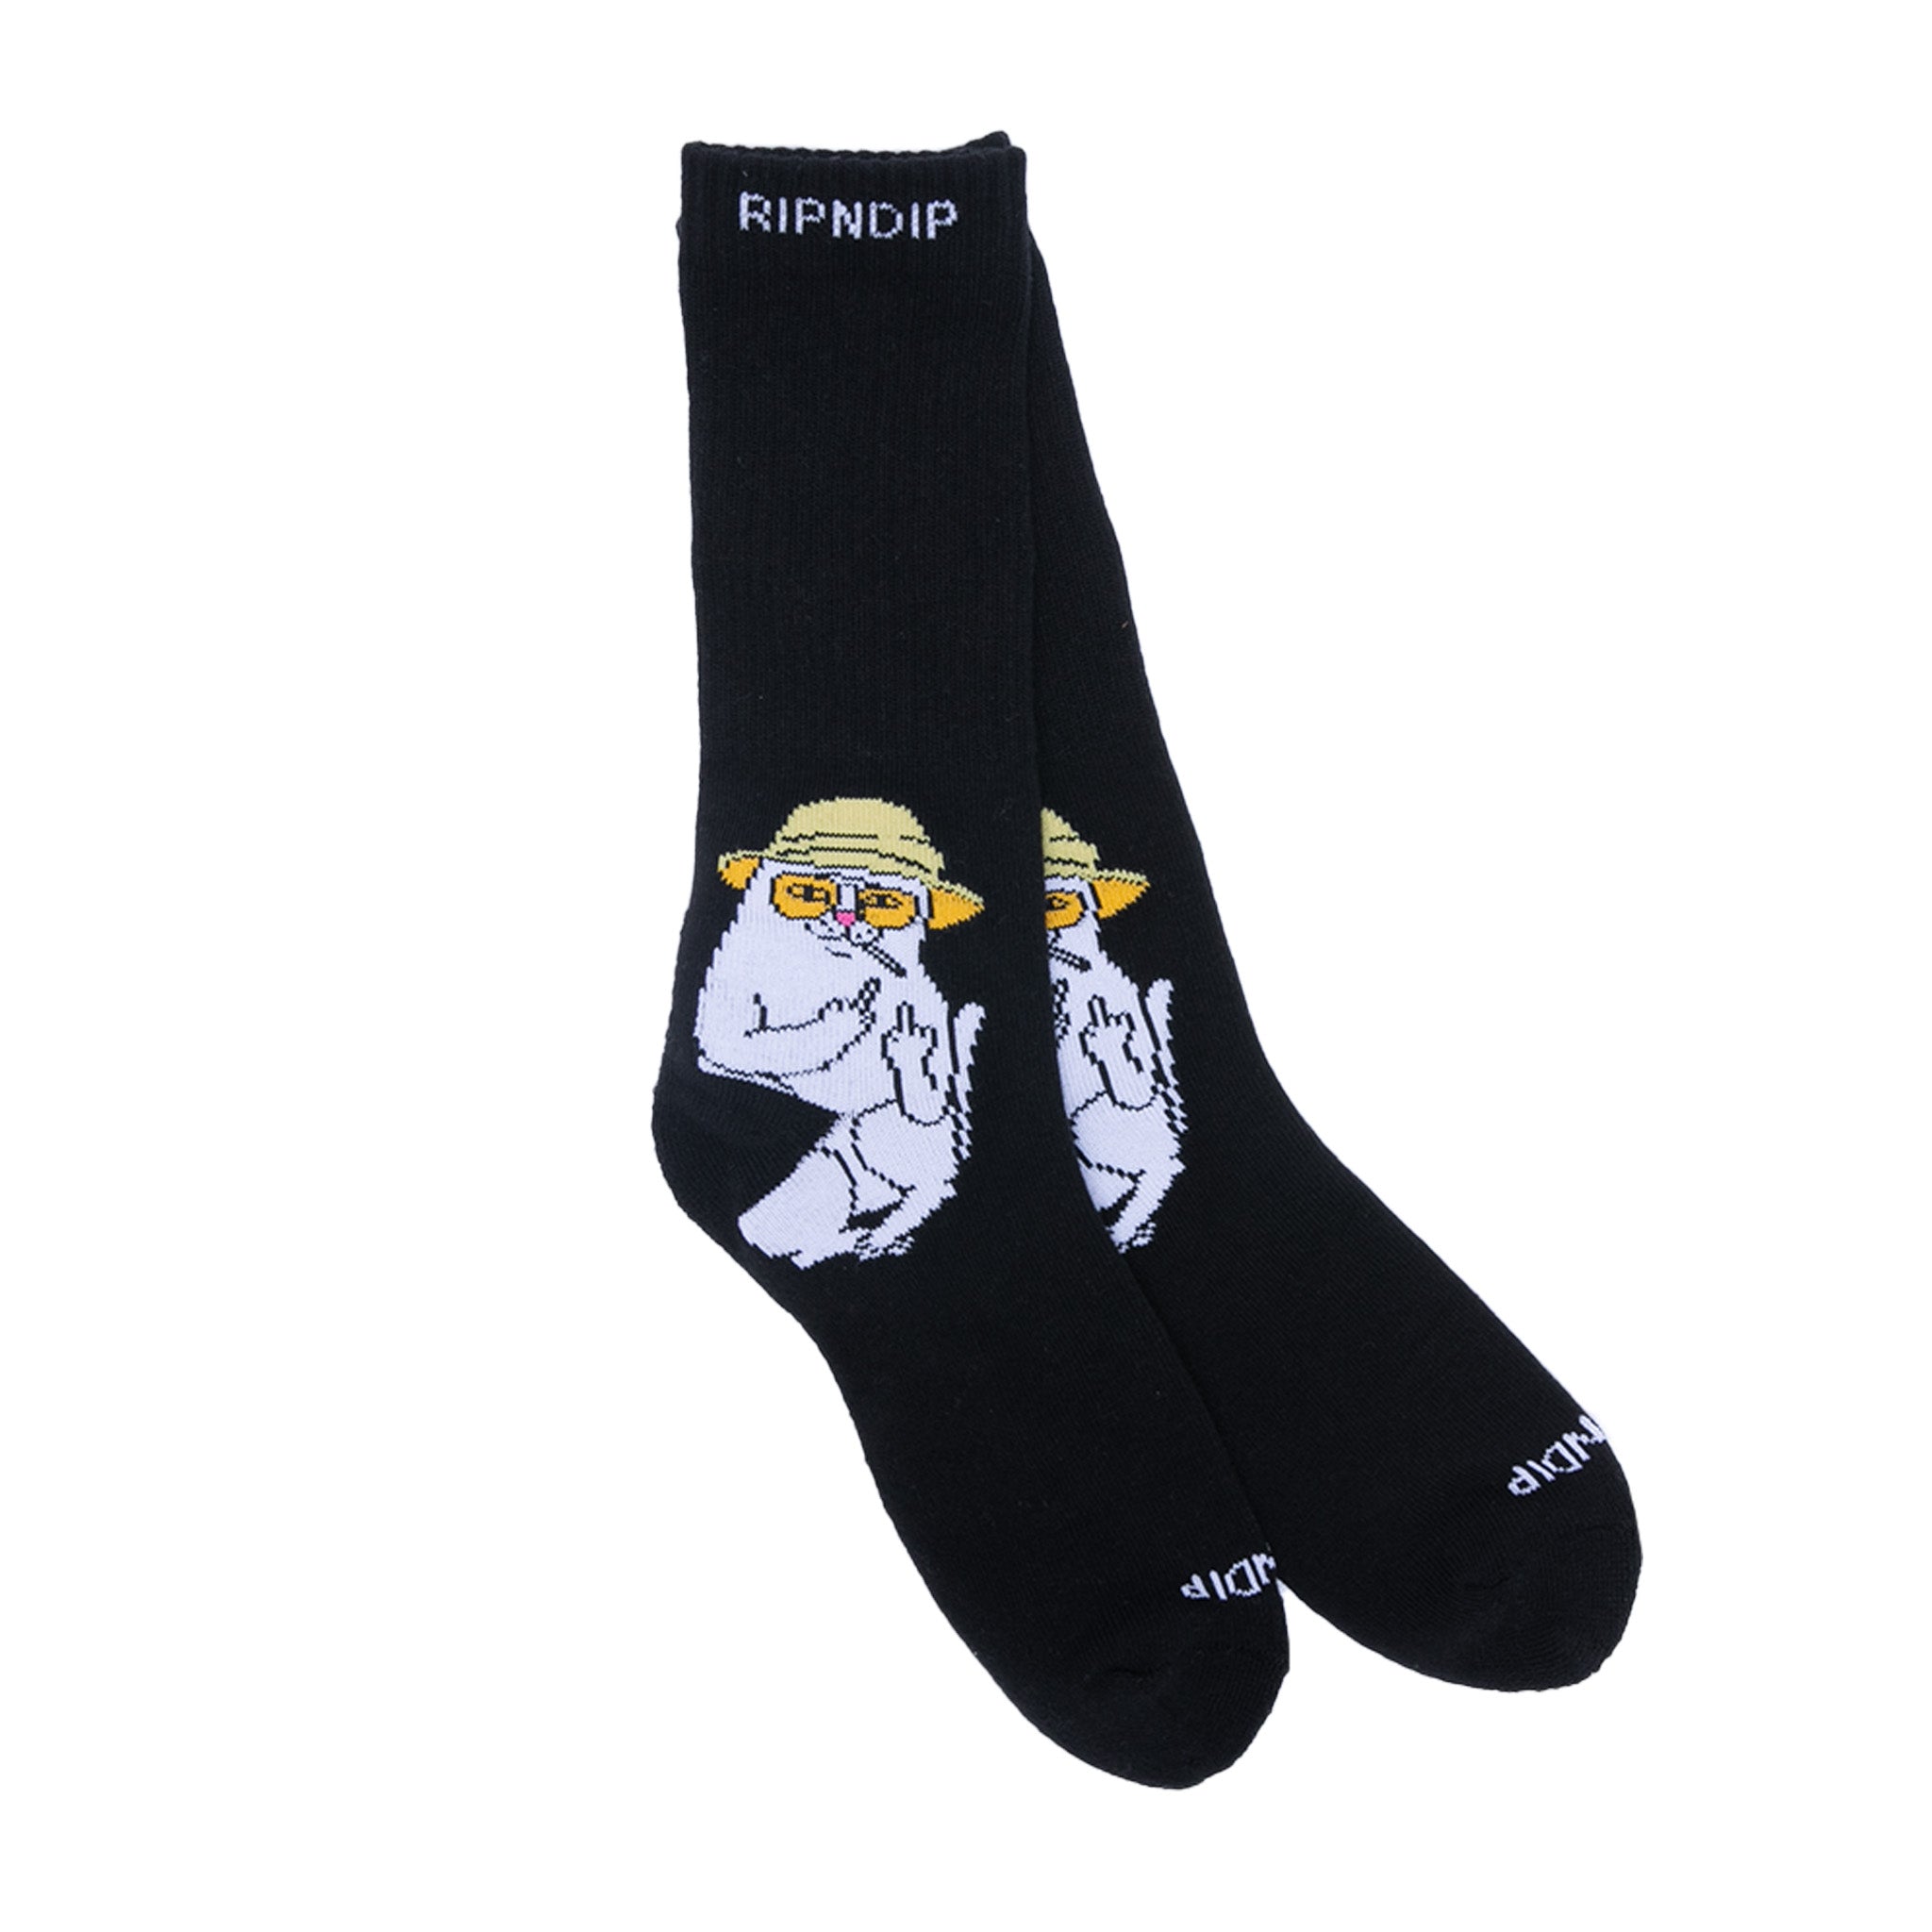 Nermal S Thompson Socks (Black)